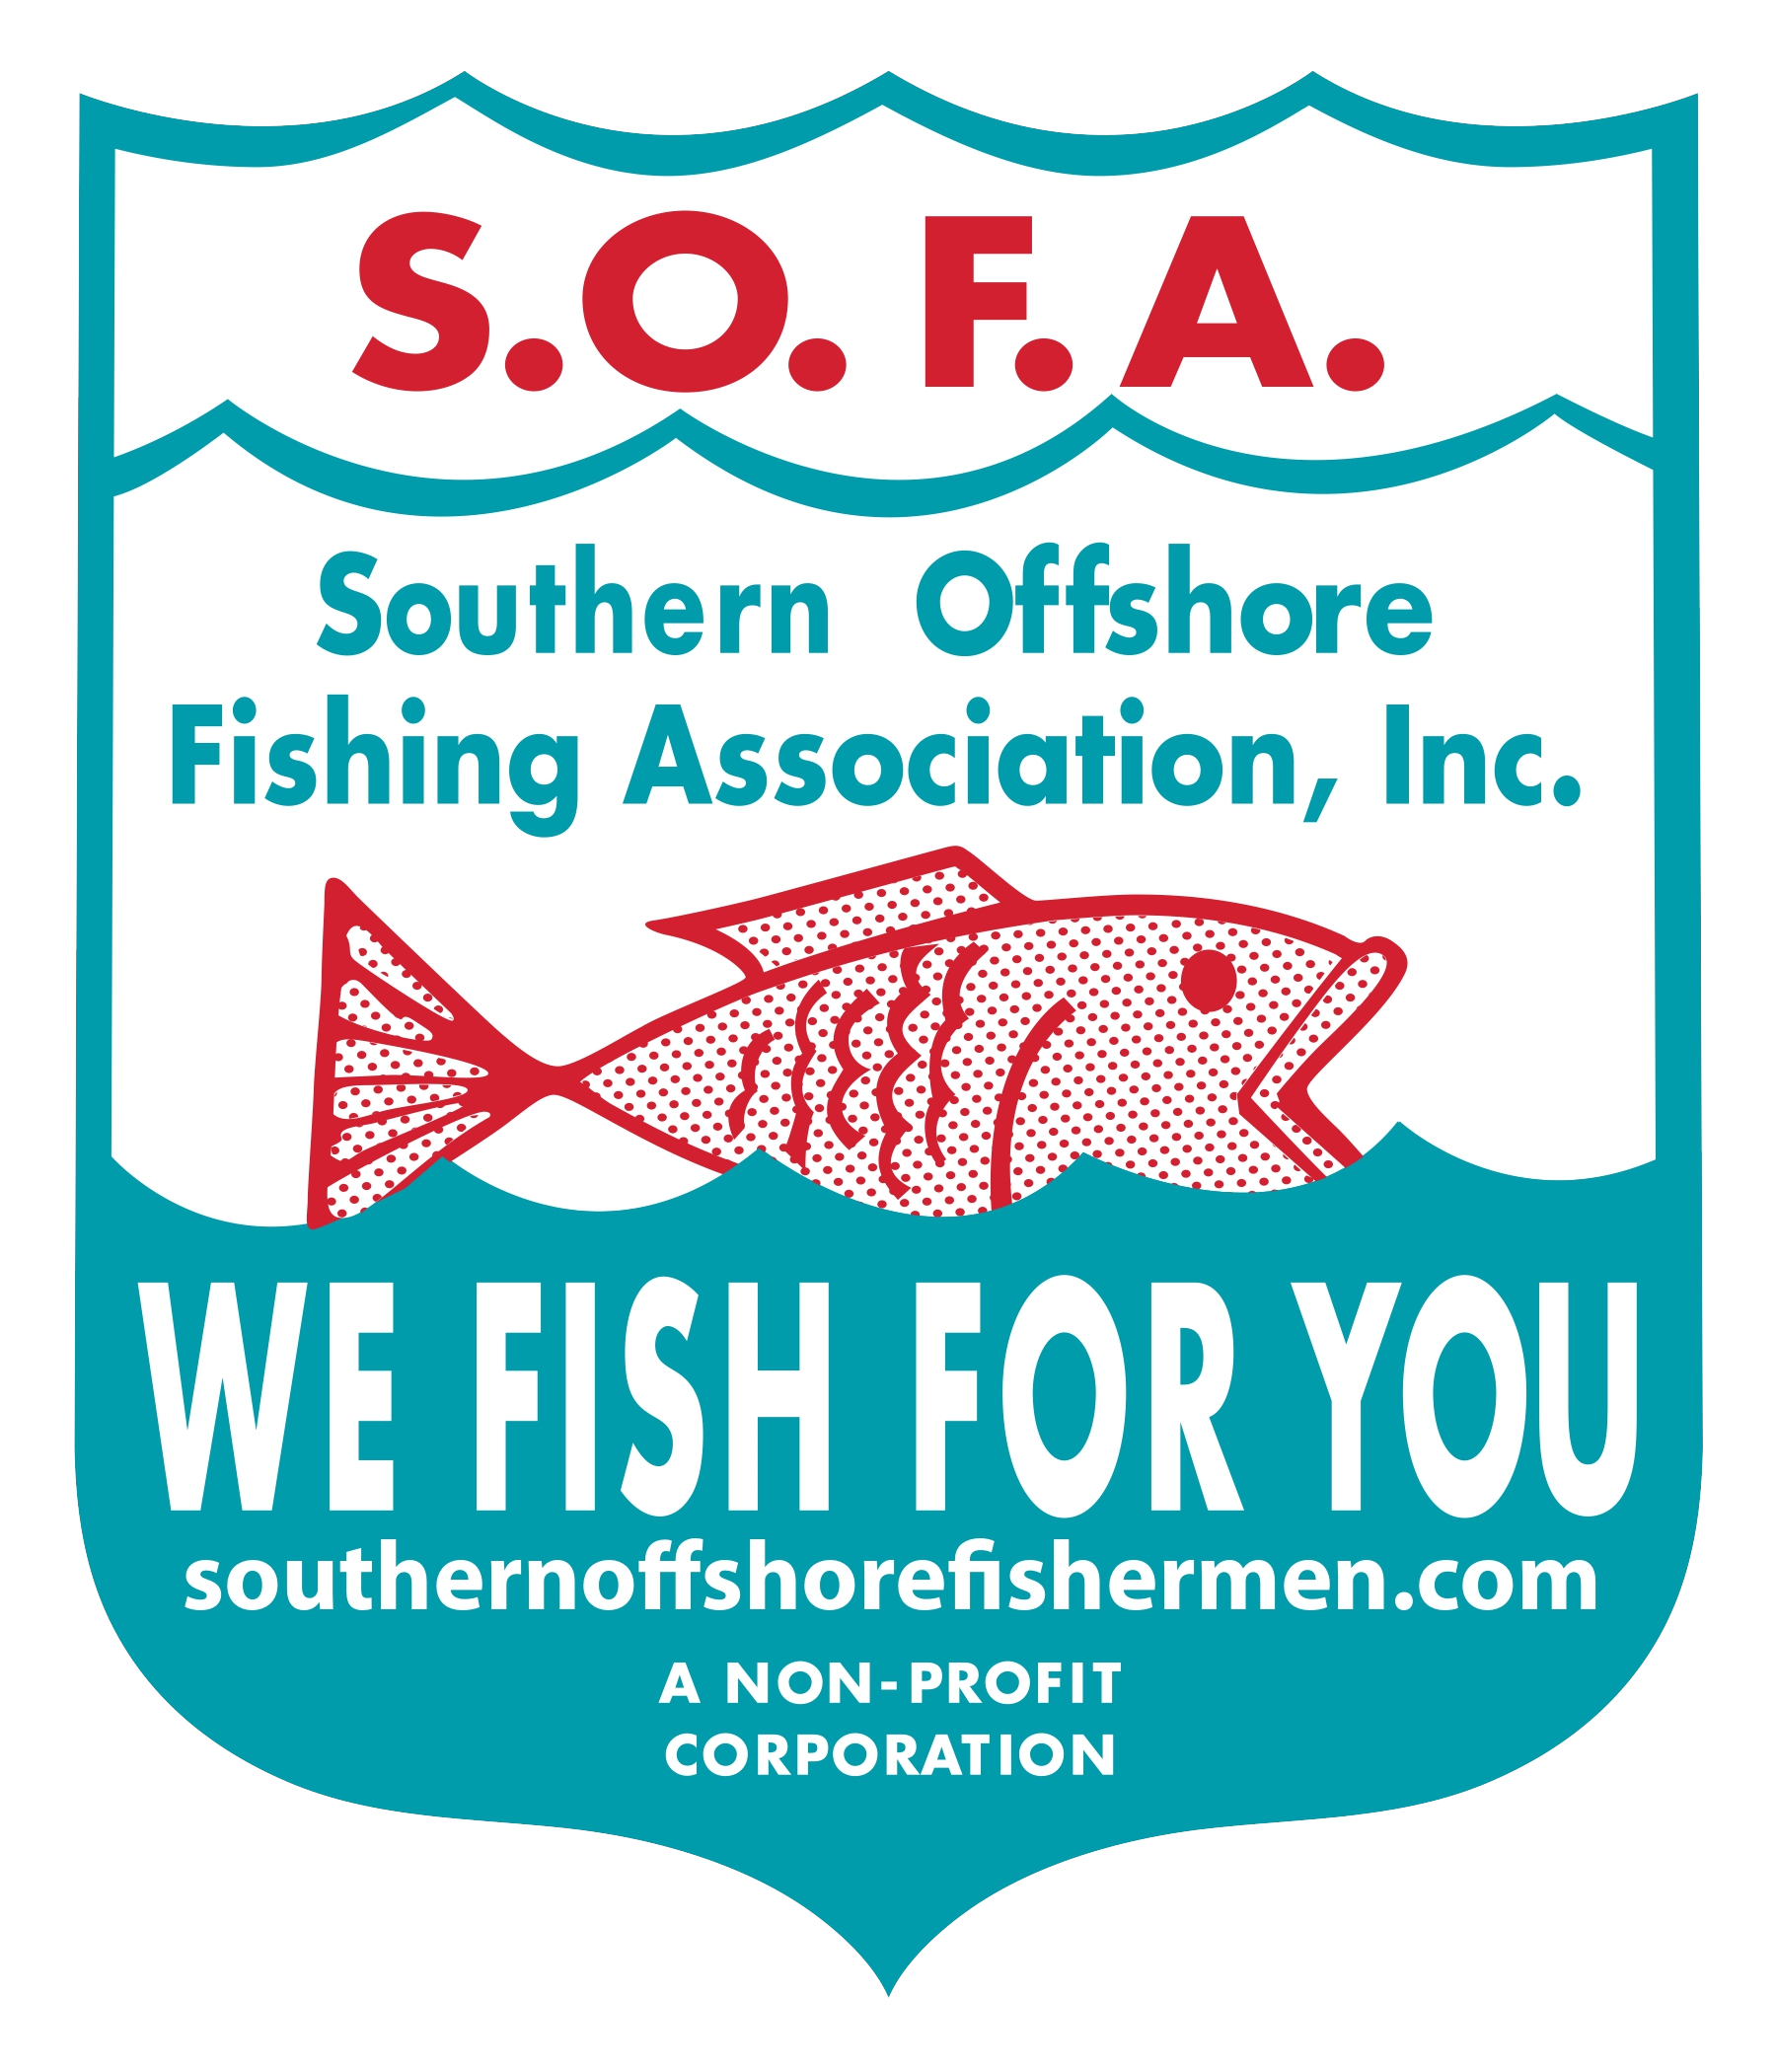 southernoffshorefishermen